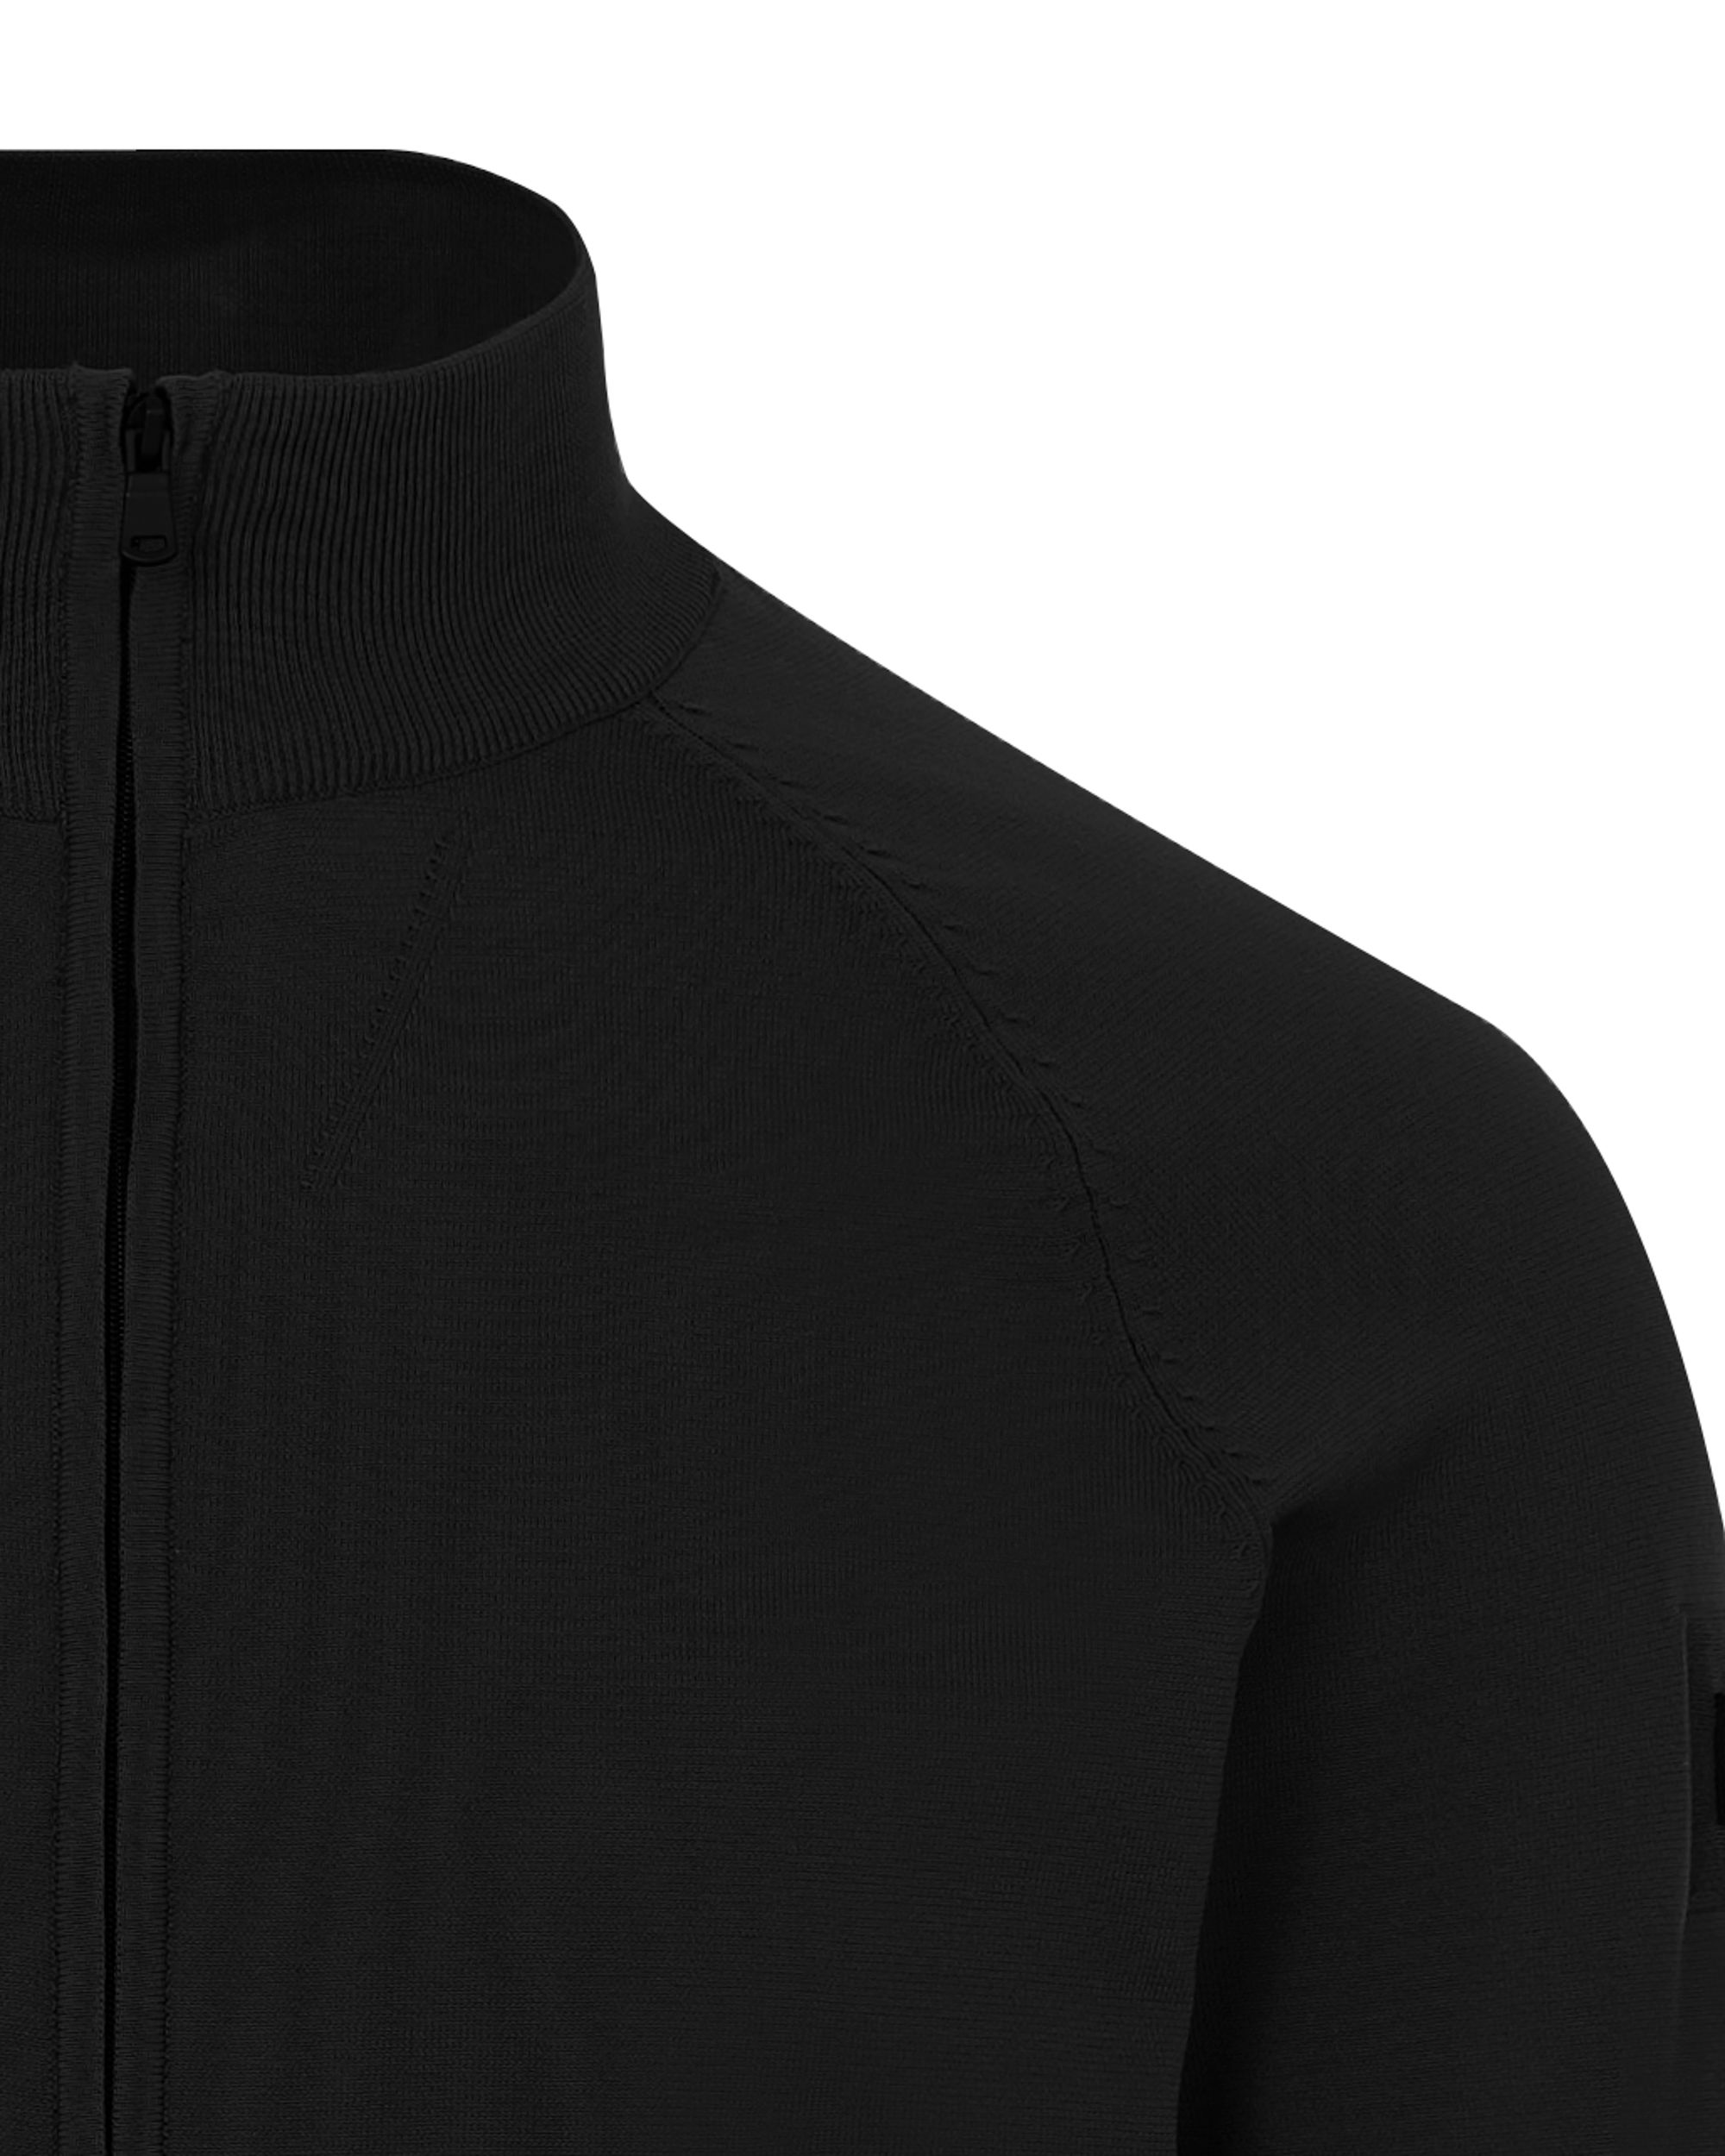 Donkervoort Douleac Vest Black 091856-001-XXXL